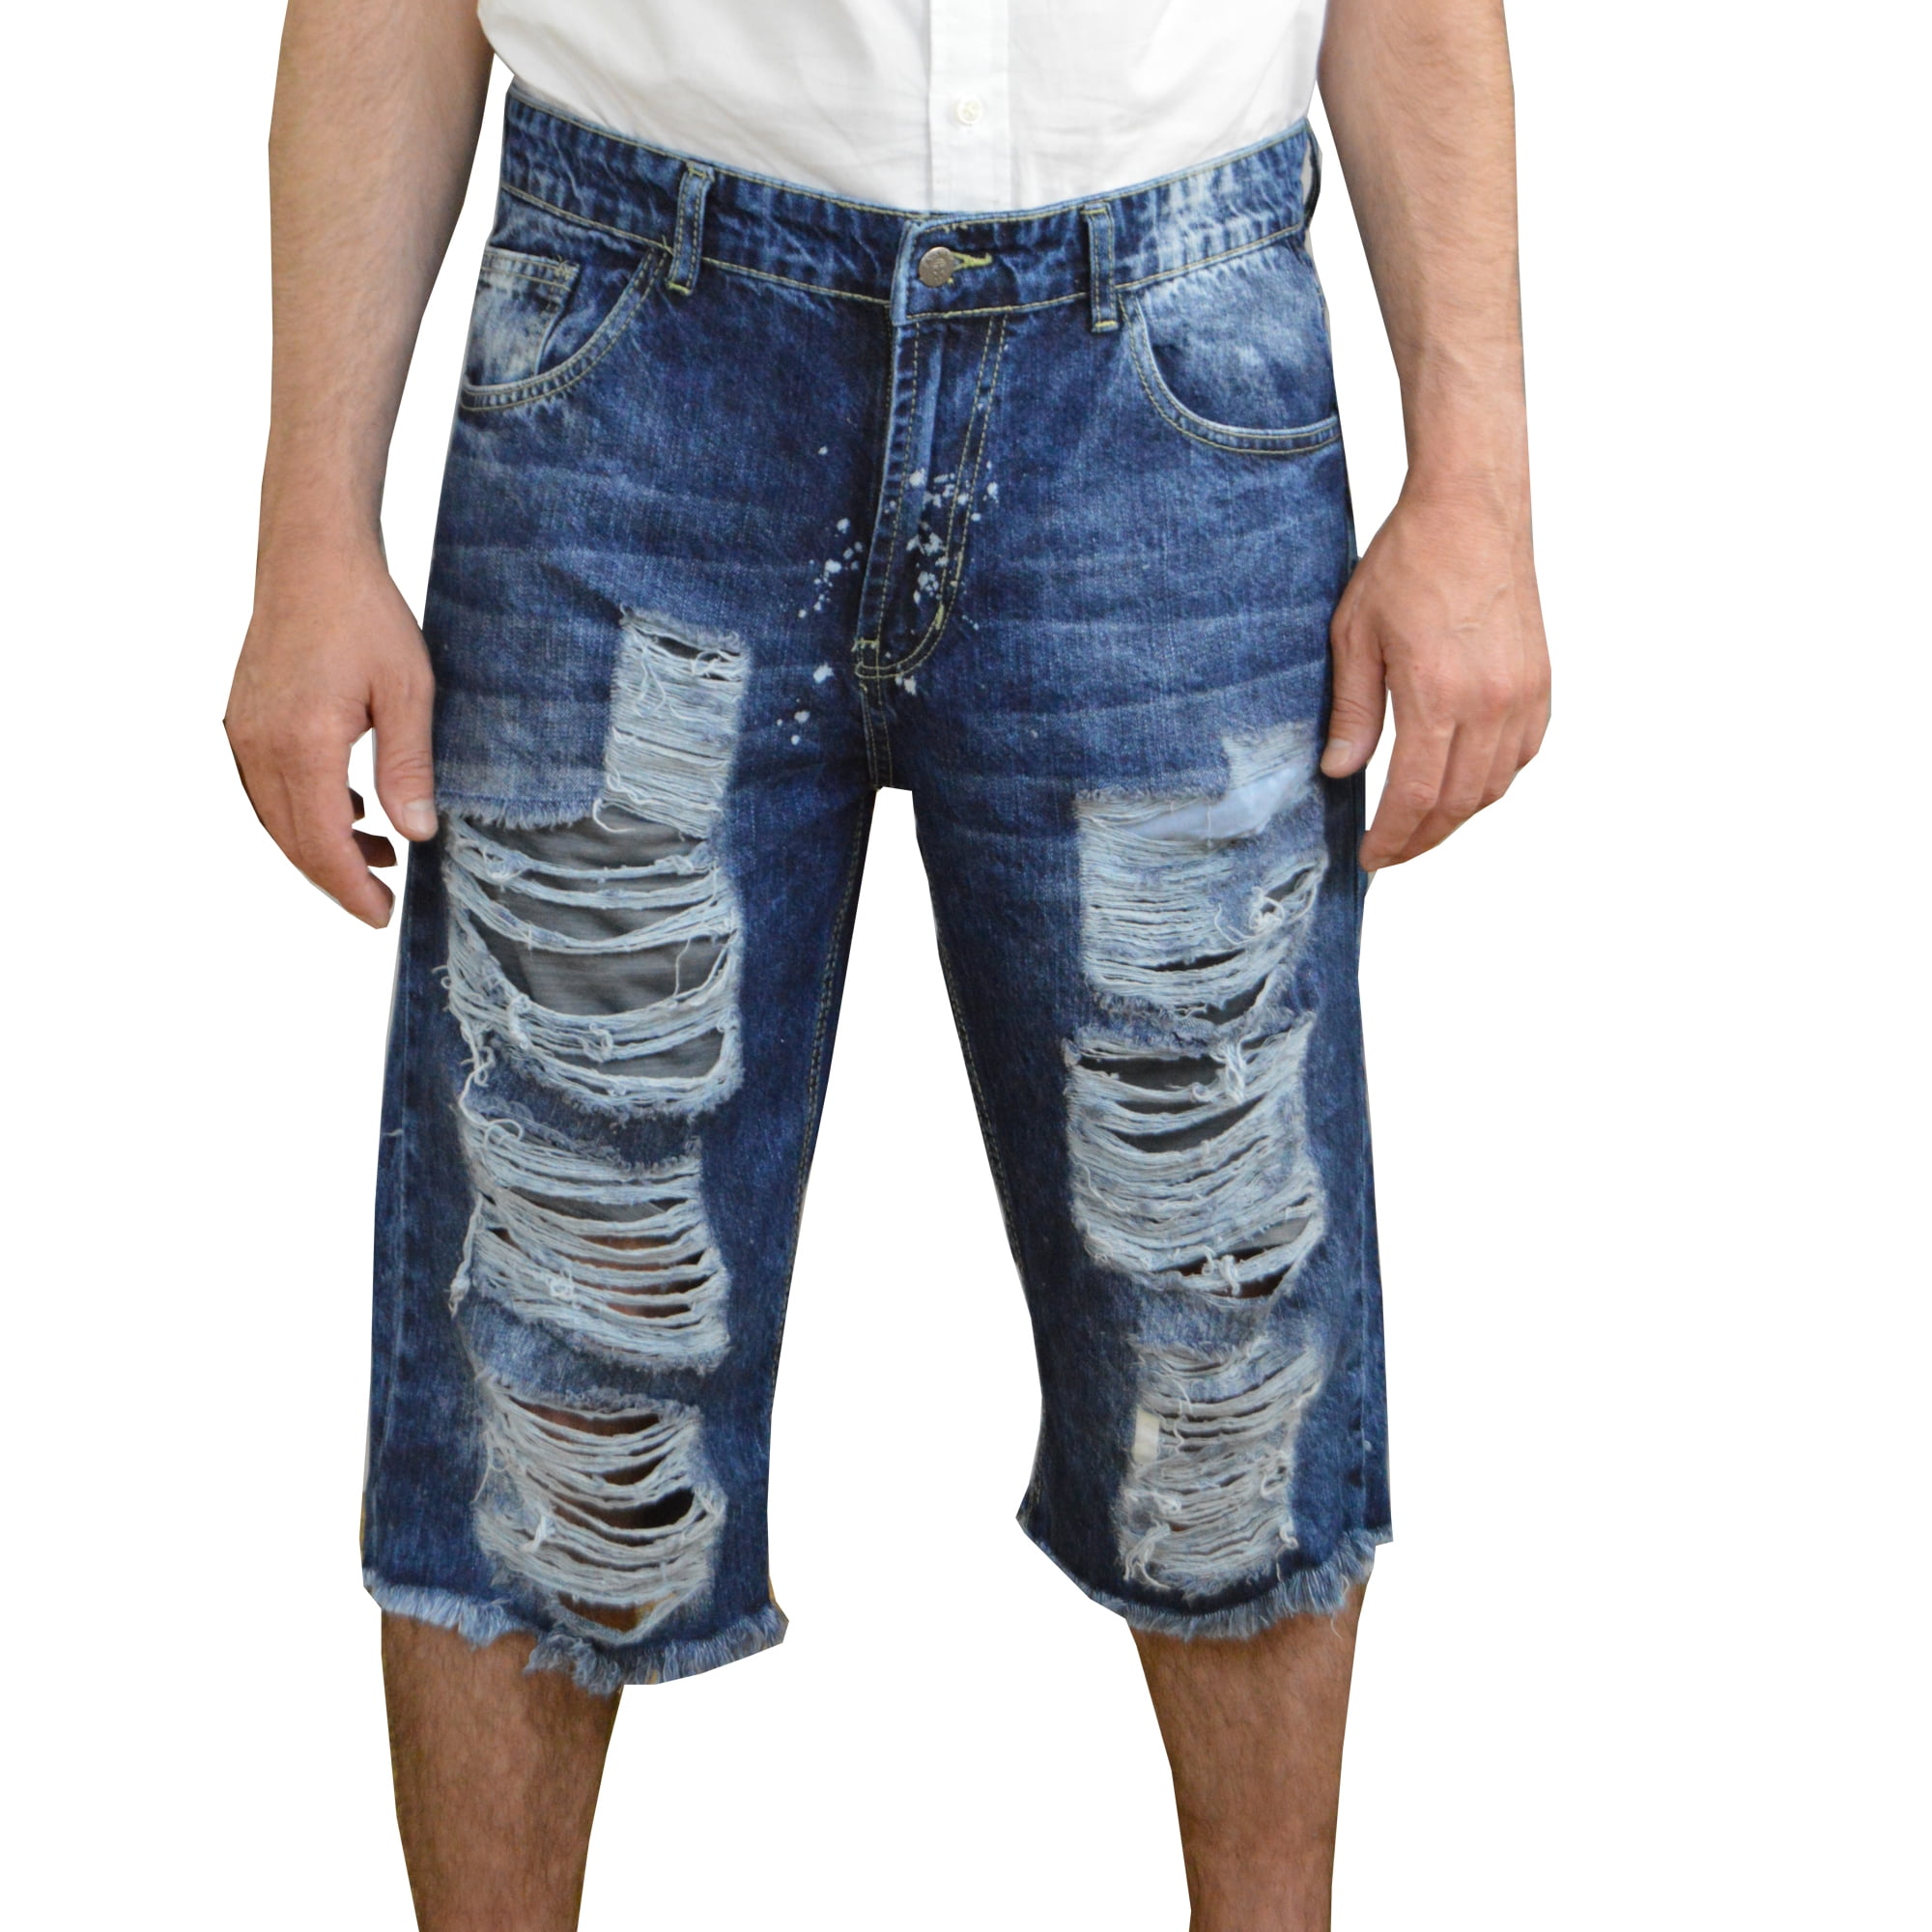 Men's Ripped Distressed Jean Shorts Broken Holes Slim Fit Stretch Denim Short Pants Destroyed Straight Leg Jeans Shorts